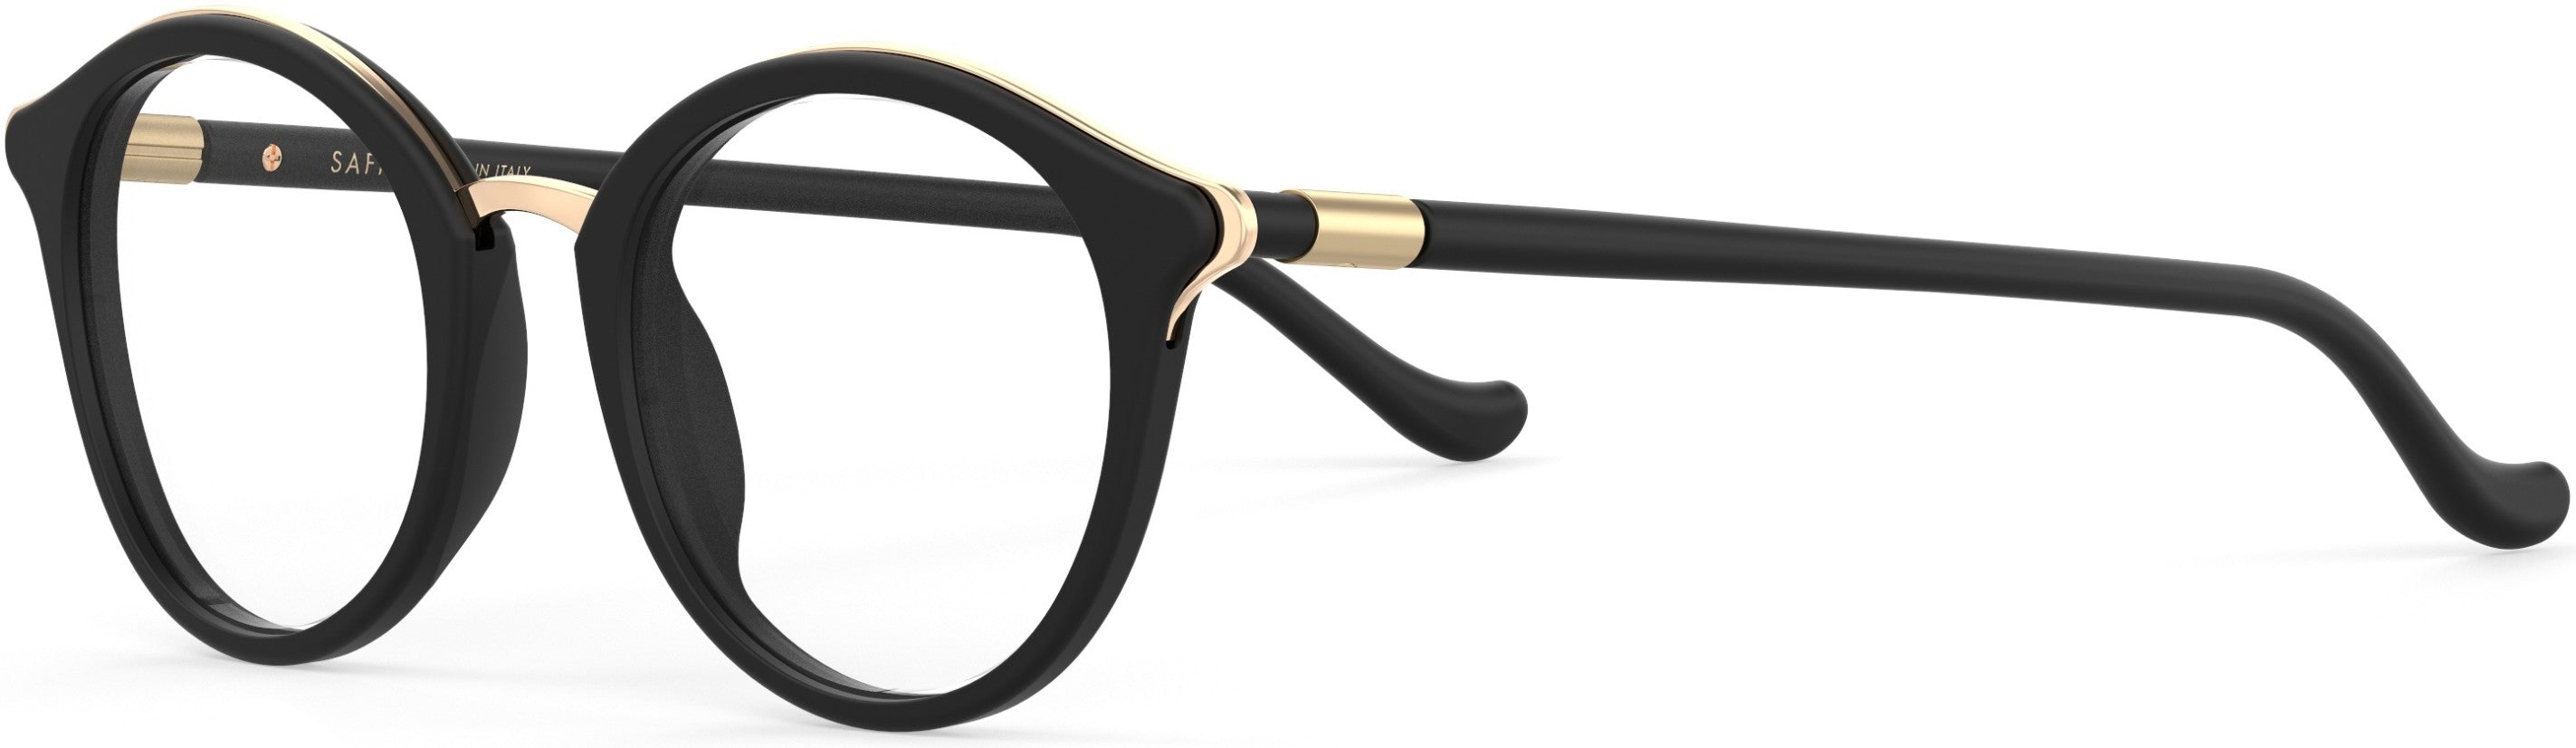 Safilo 2.0 Ciglia 02 Oval Modified Eyeglasses 0I46-0I46  Black Gold (00 Demo Lens)